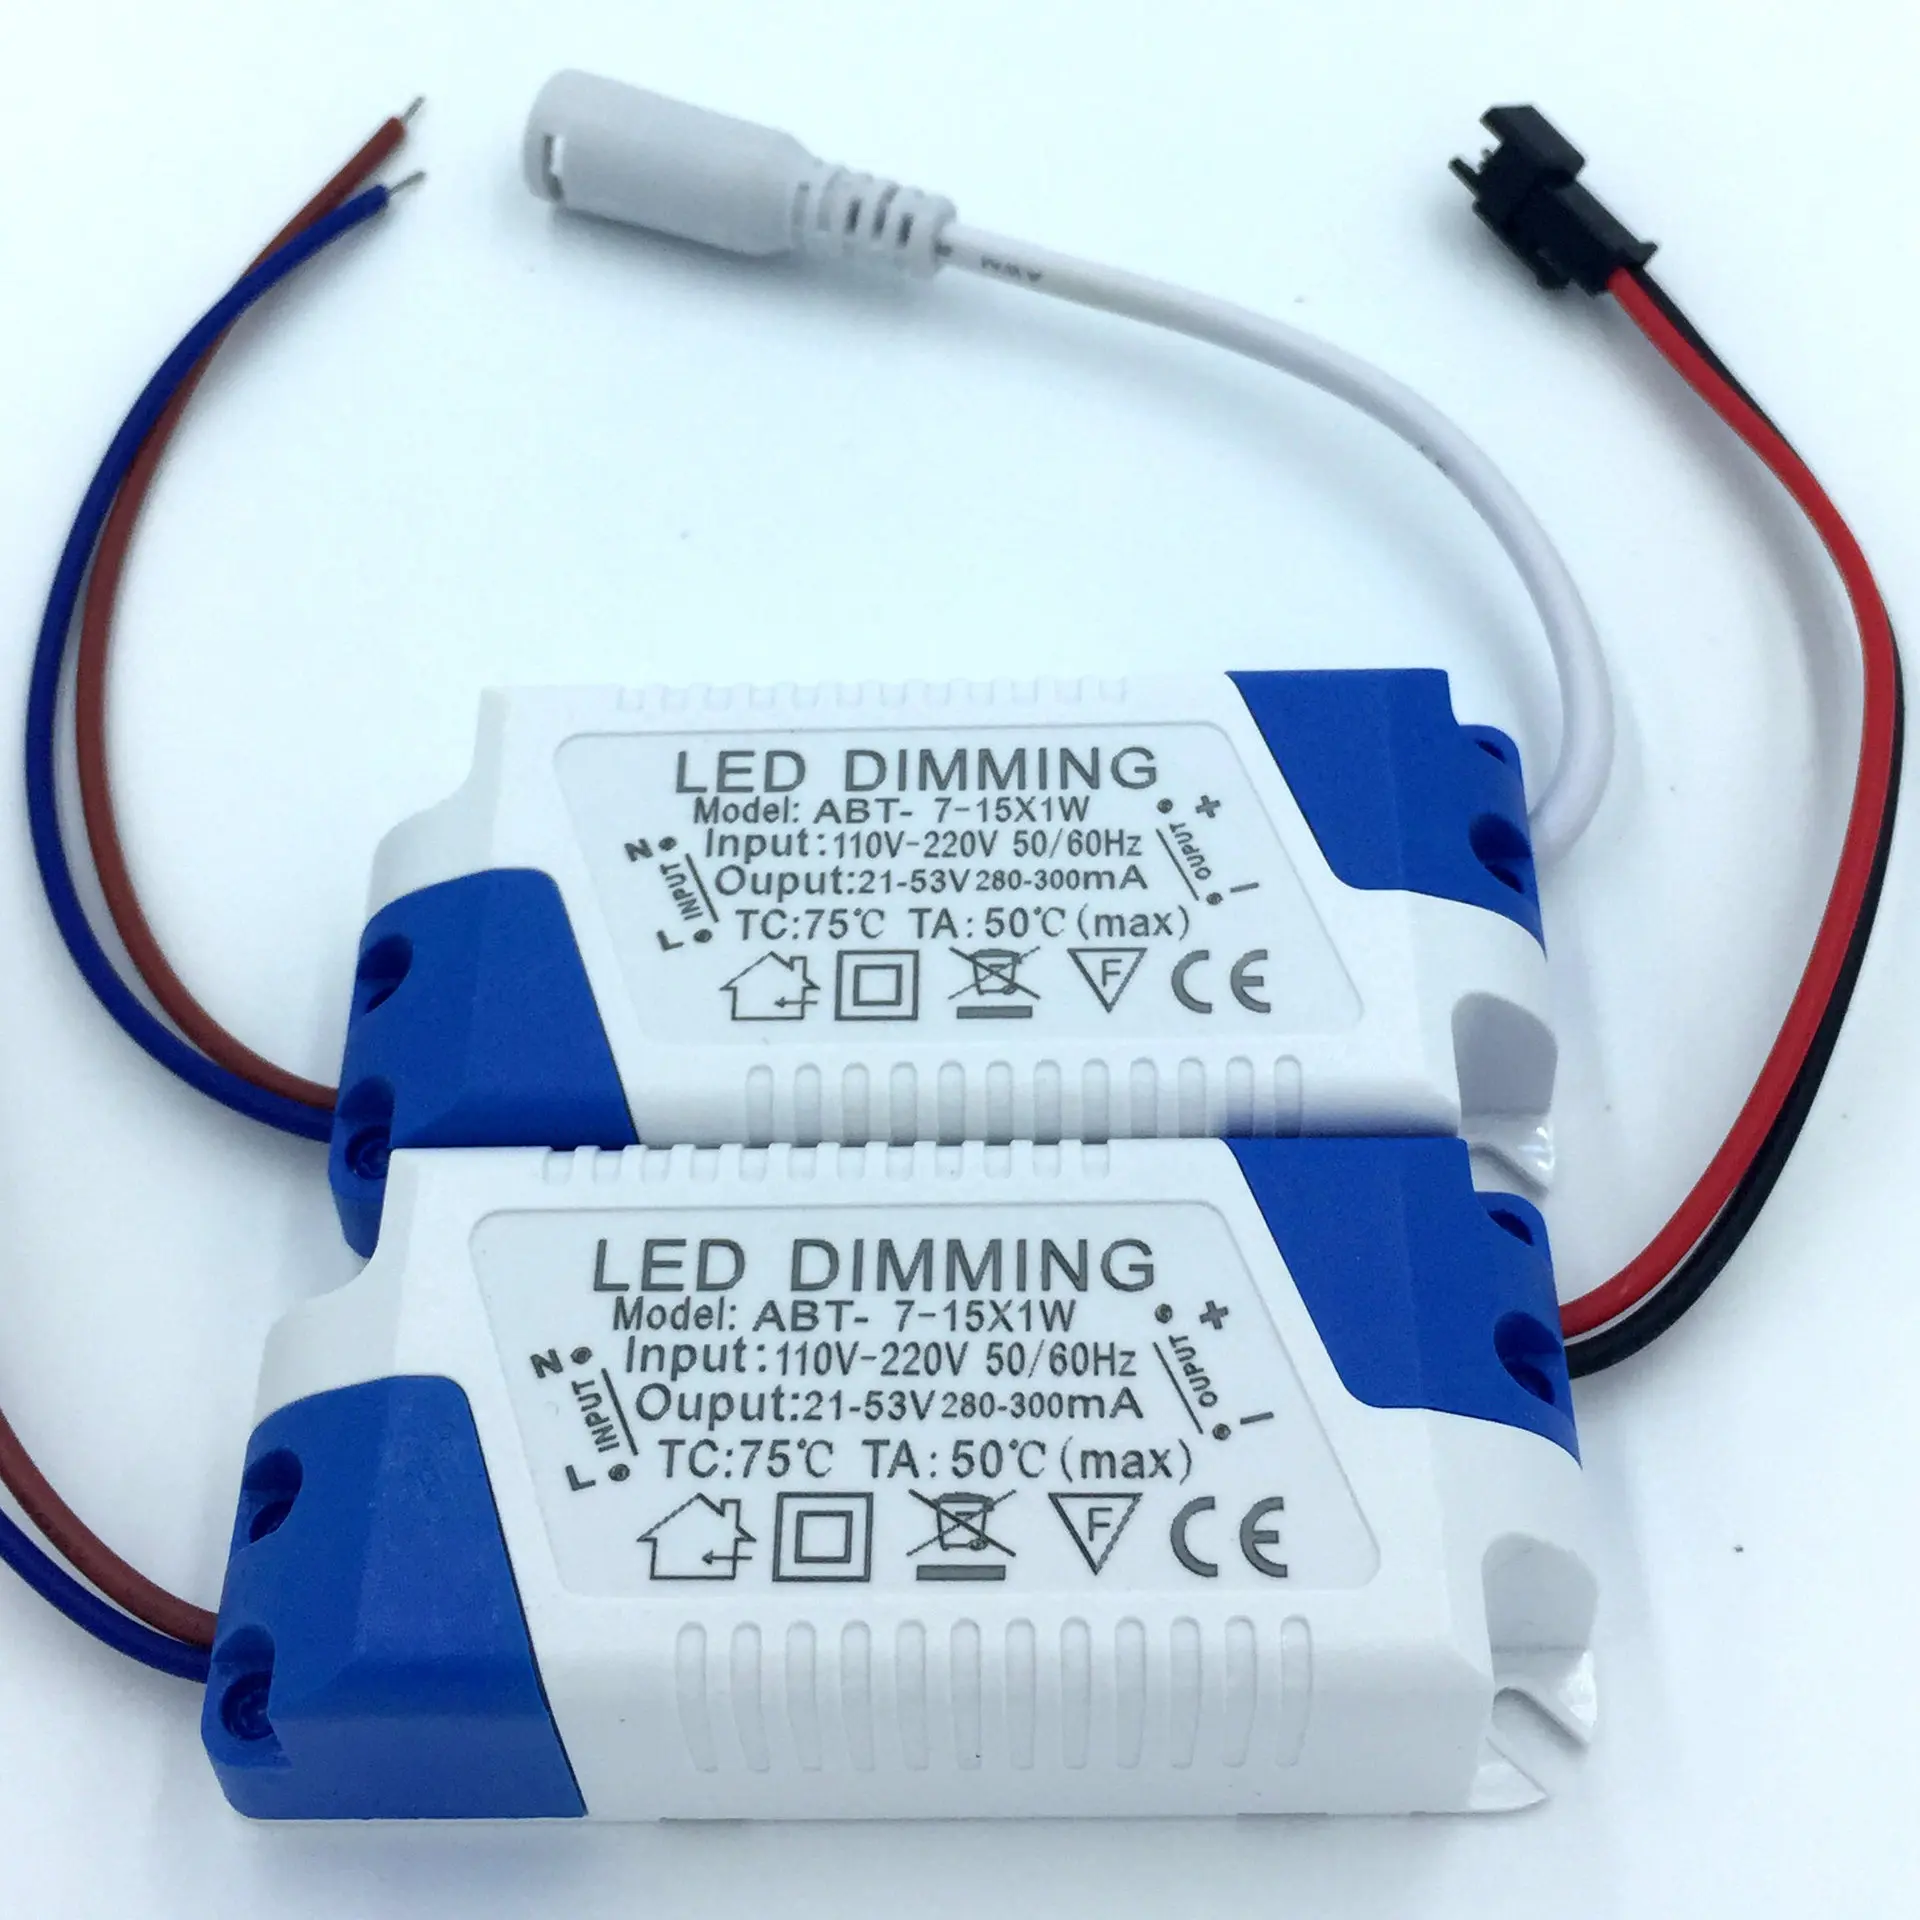 

LED Dimmable Led Driver Downlight Panel Ceilling Dimmable Power Supply 300mA 7W 9W 10W 12W 15W 18W 21W 24W Adapter AC110V 220V